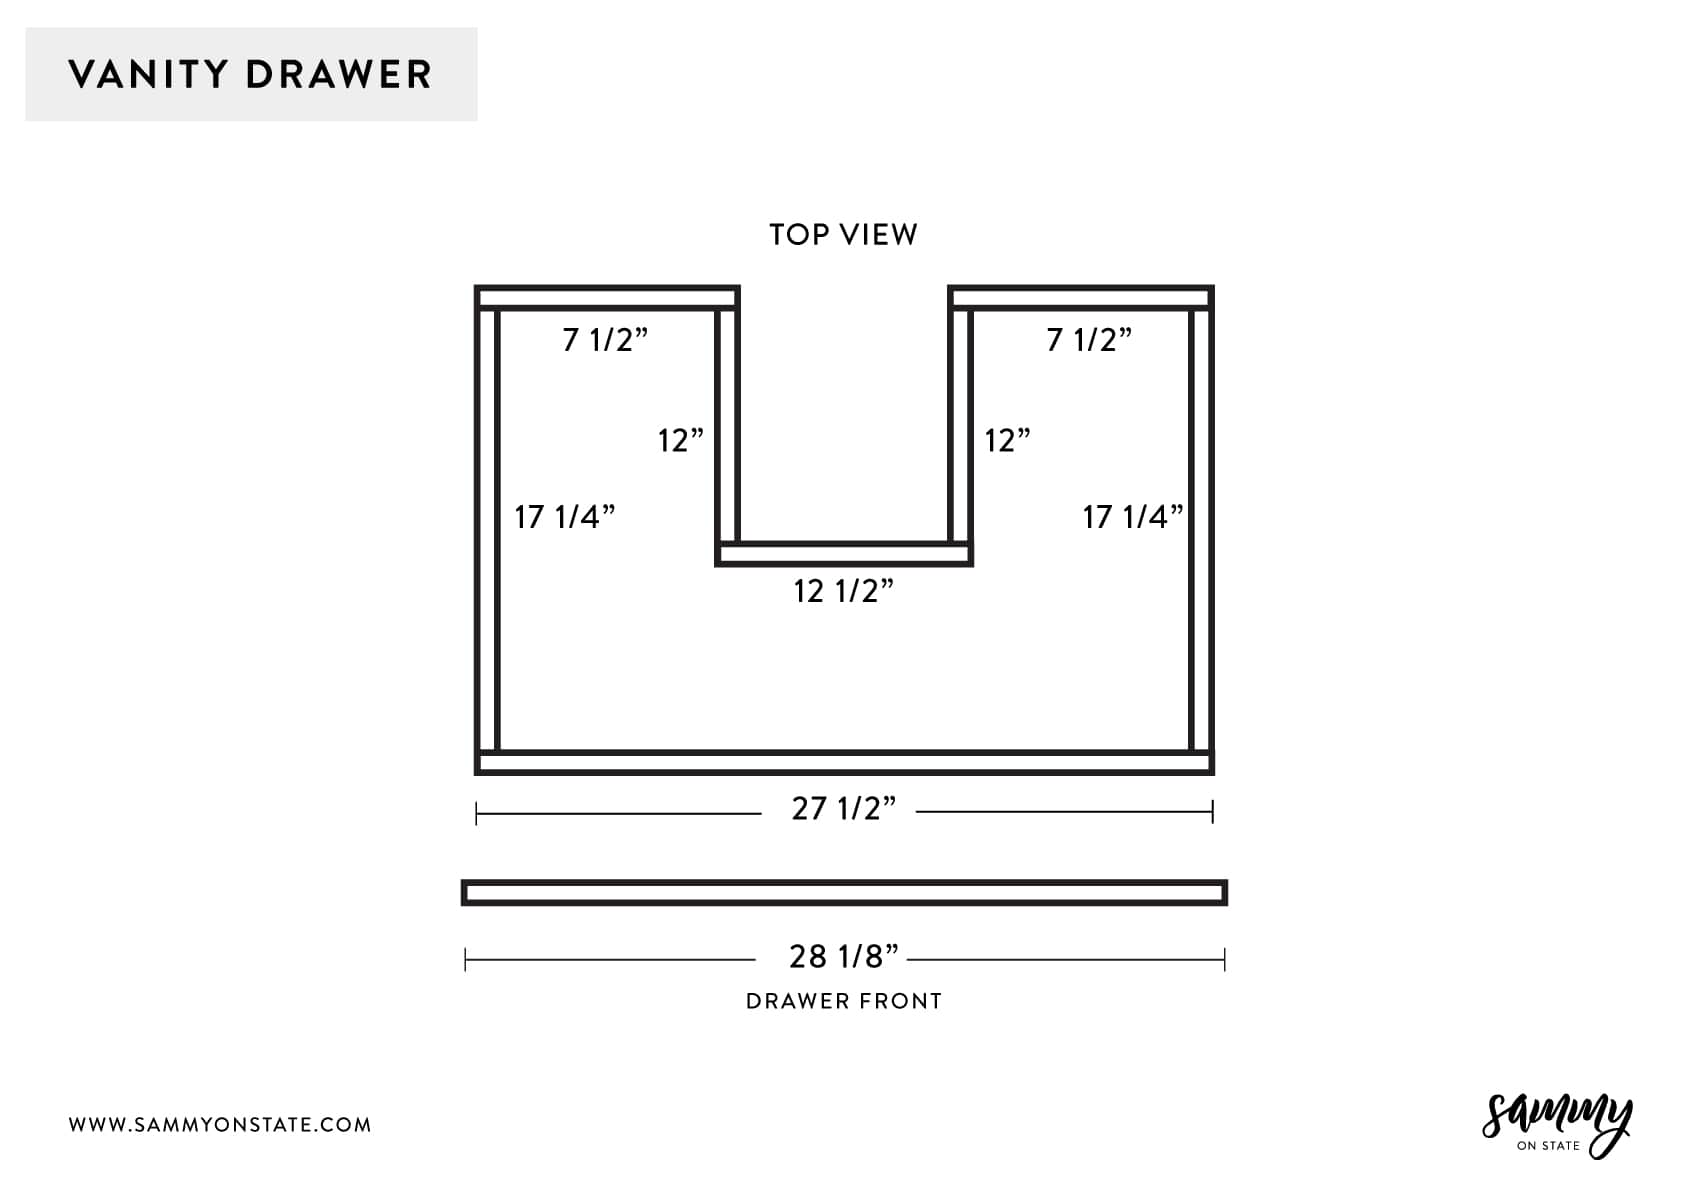 Diagram of vanity drawer top view